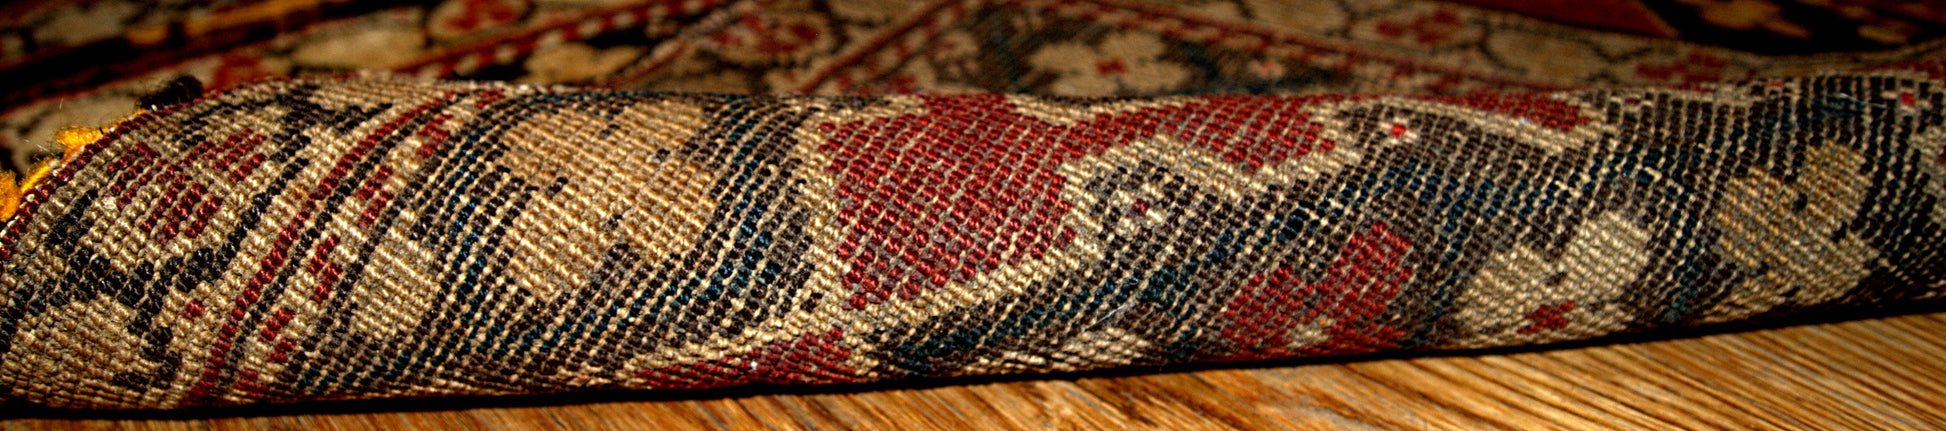 Handmade antique collectible Armenian Karabagh pair of rugs 1880s